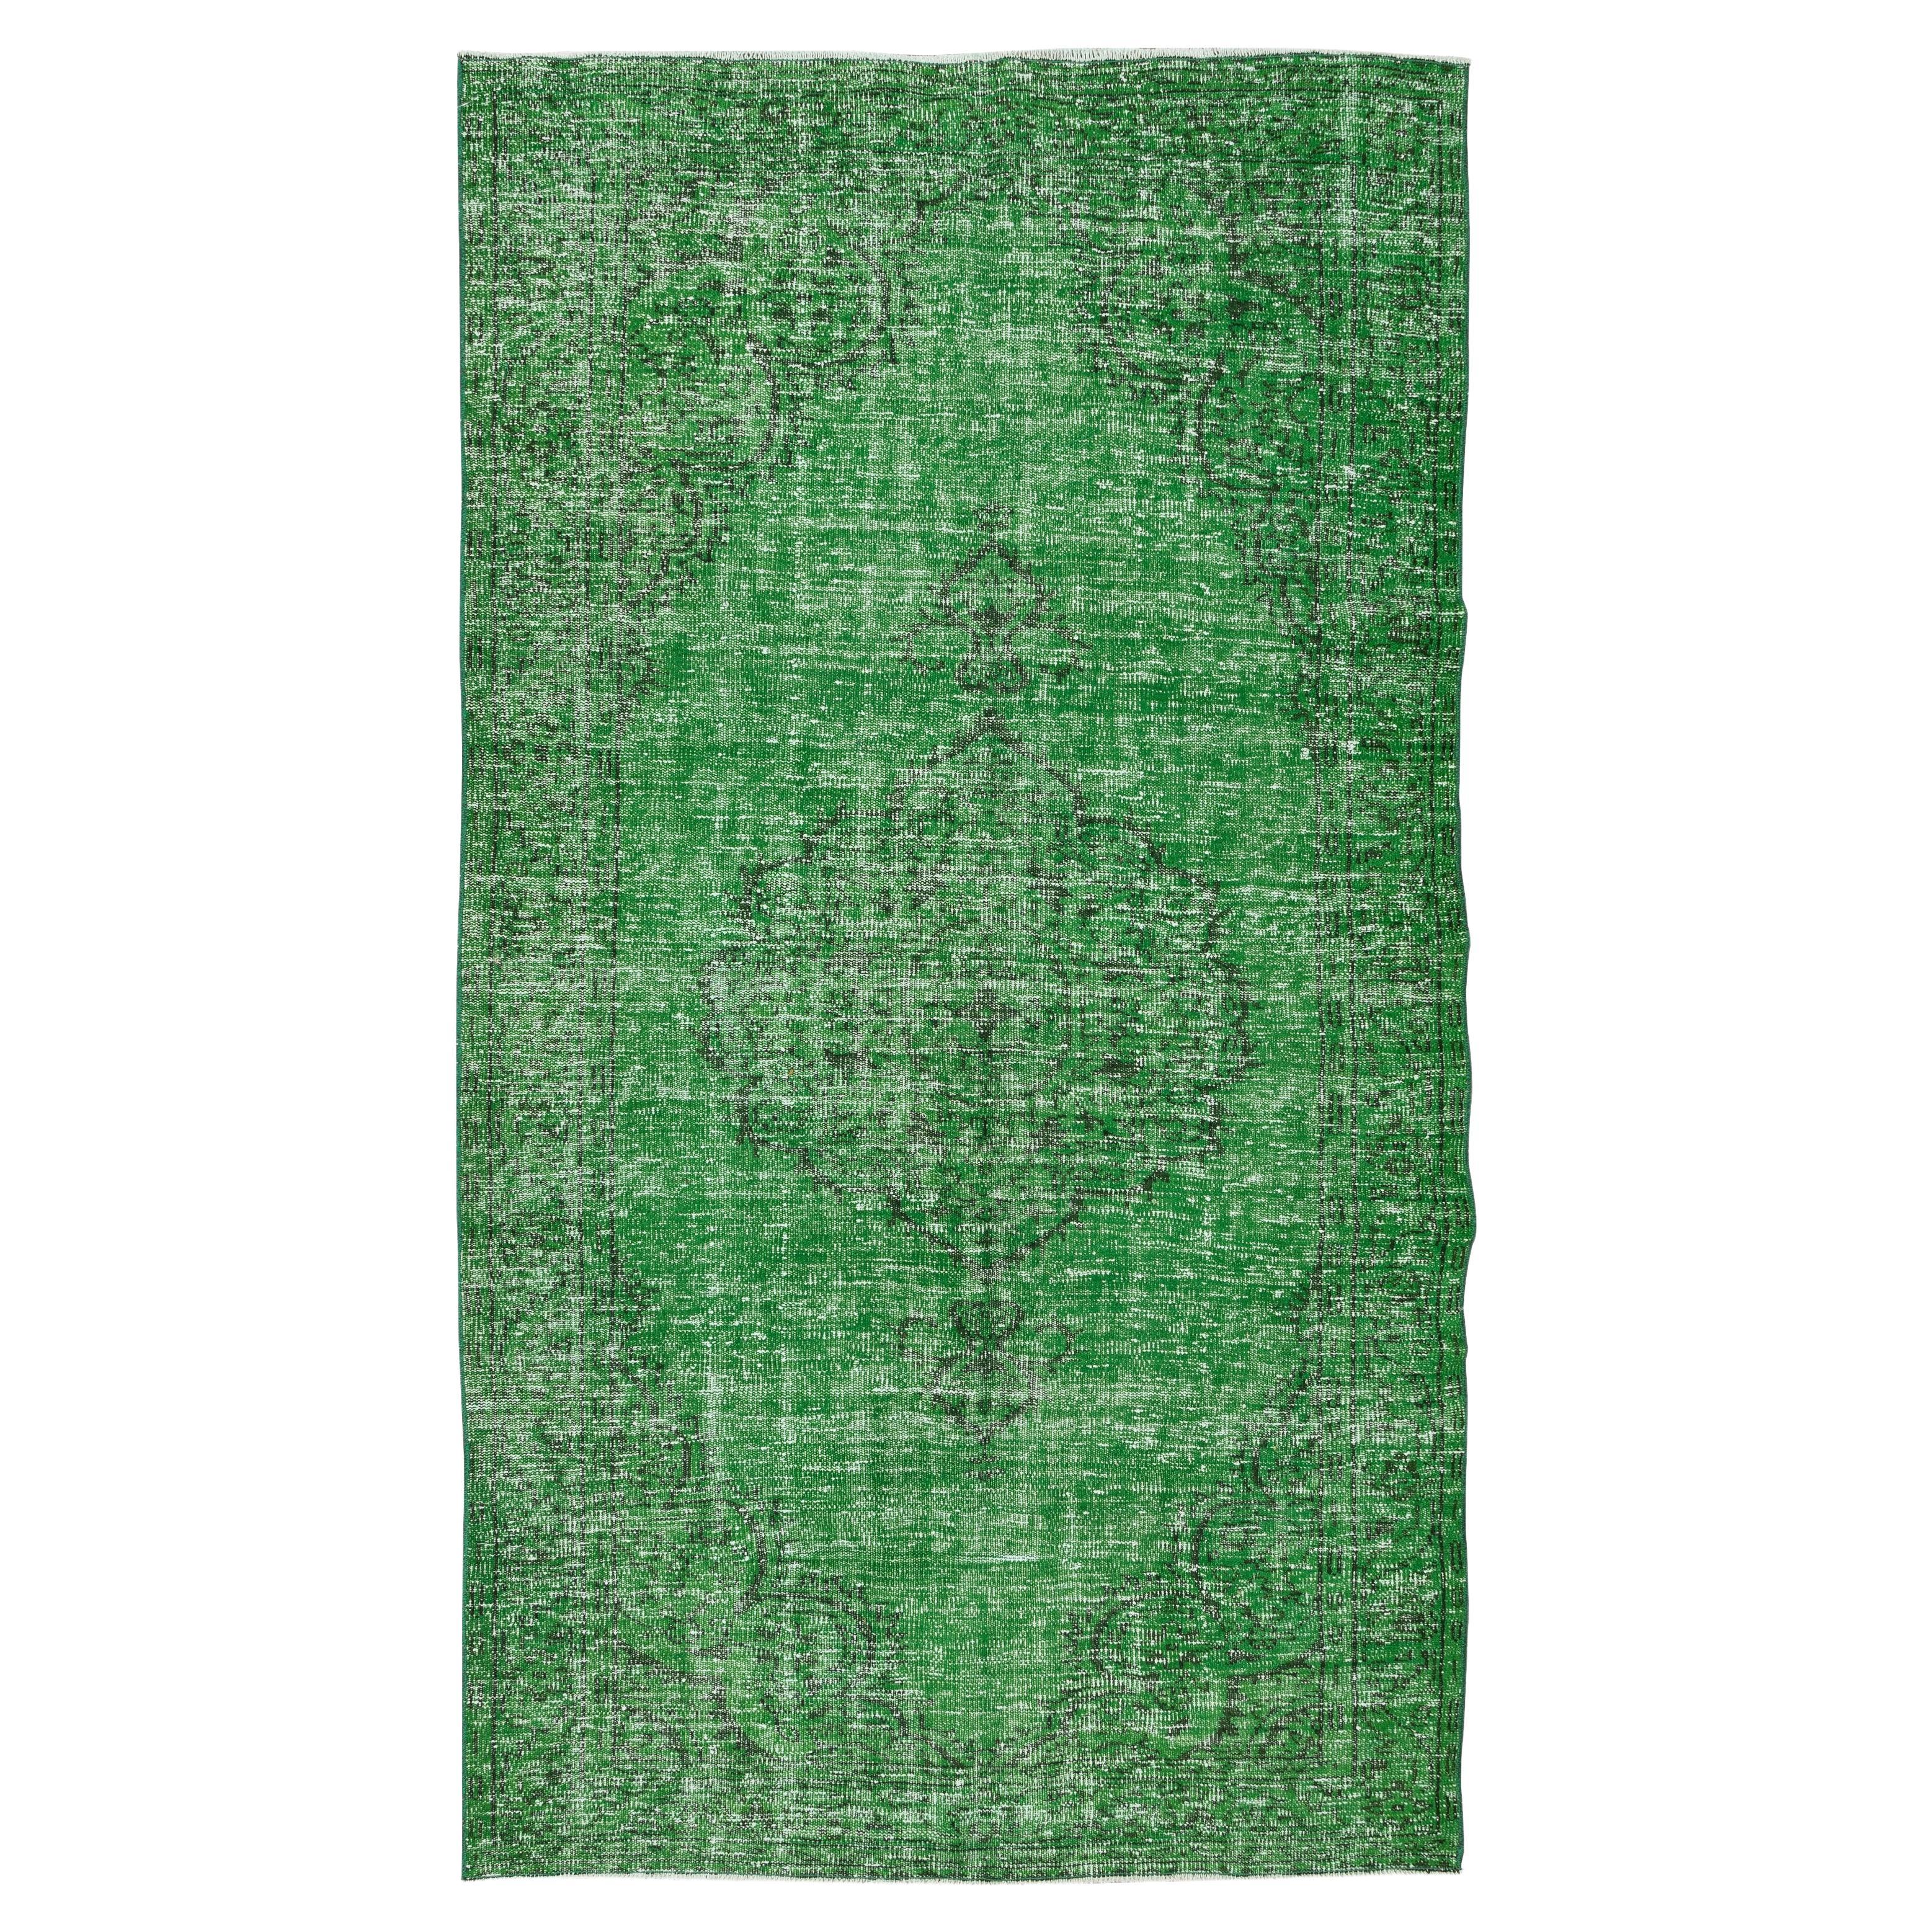 5.2x9.3 Ft Vintage Anatolian Area Rug, Green Handmade Contemporary Wool Carpet